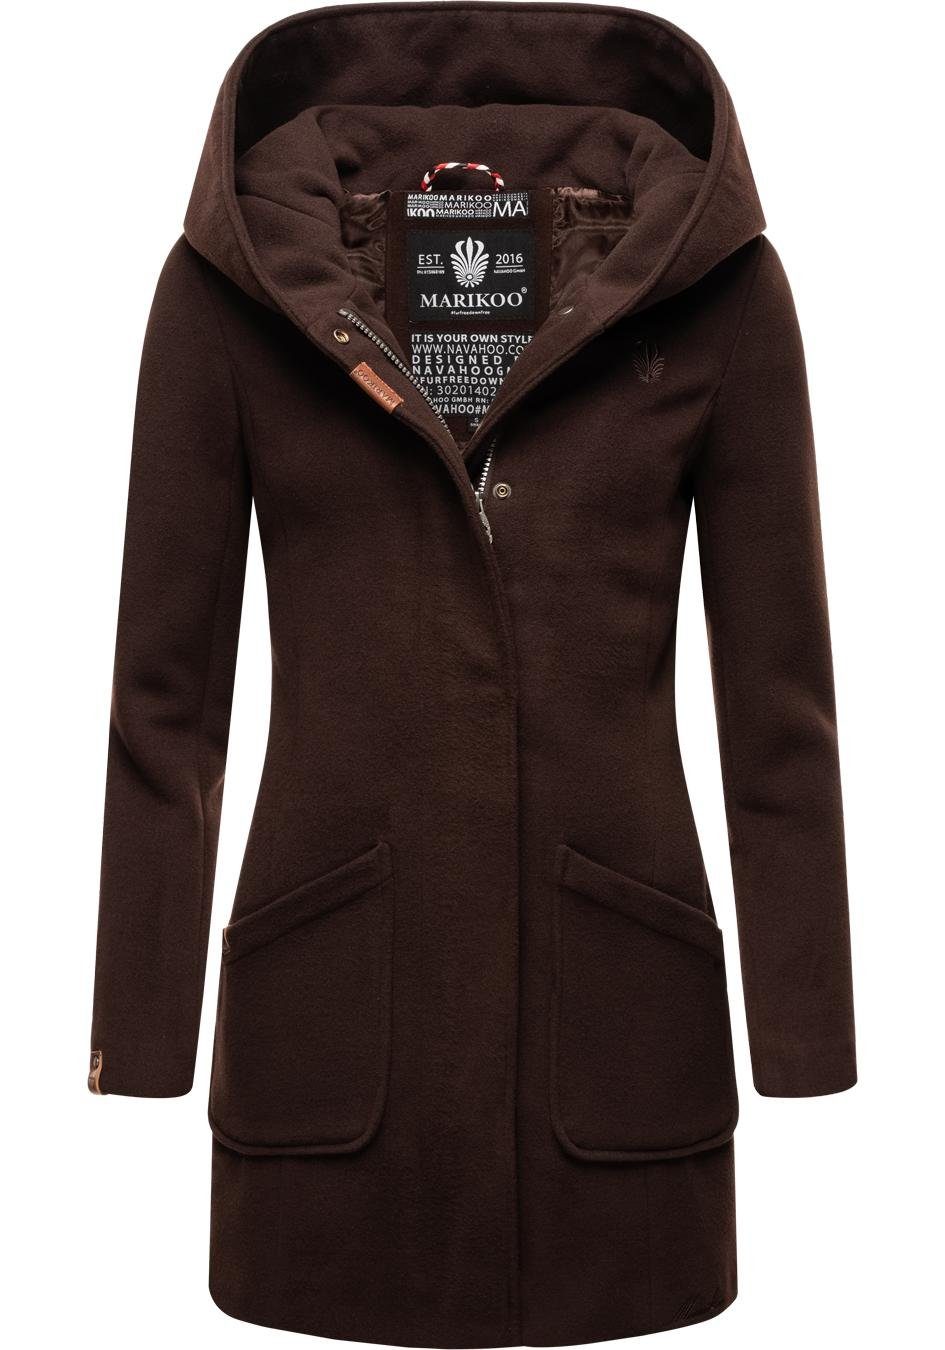 Marikoo Wintermantel Maikoo hochwertiger Mantel mit großer Kapuze dunkelbraun